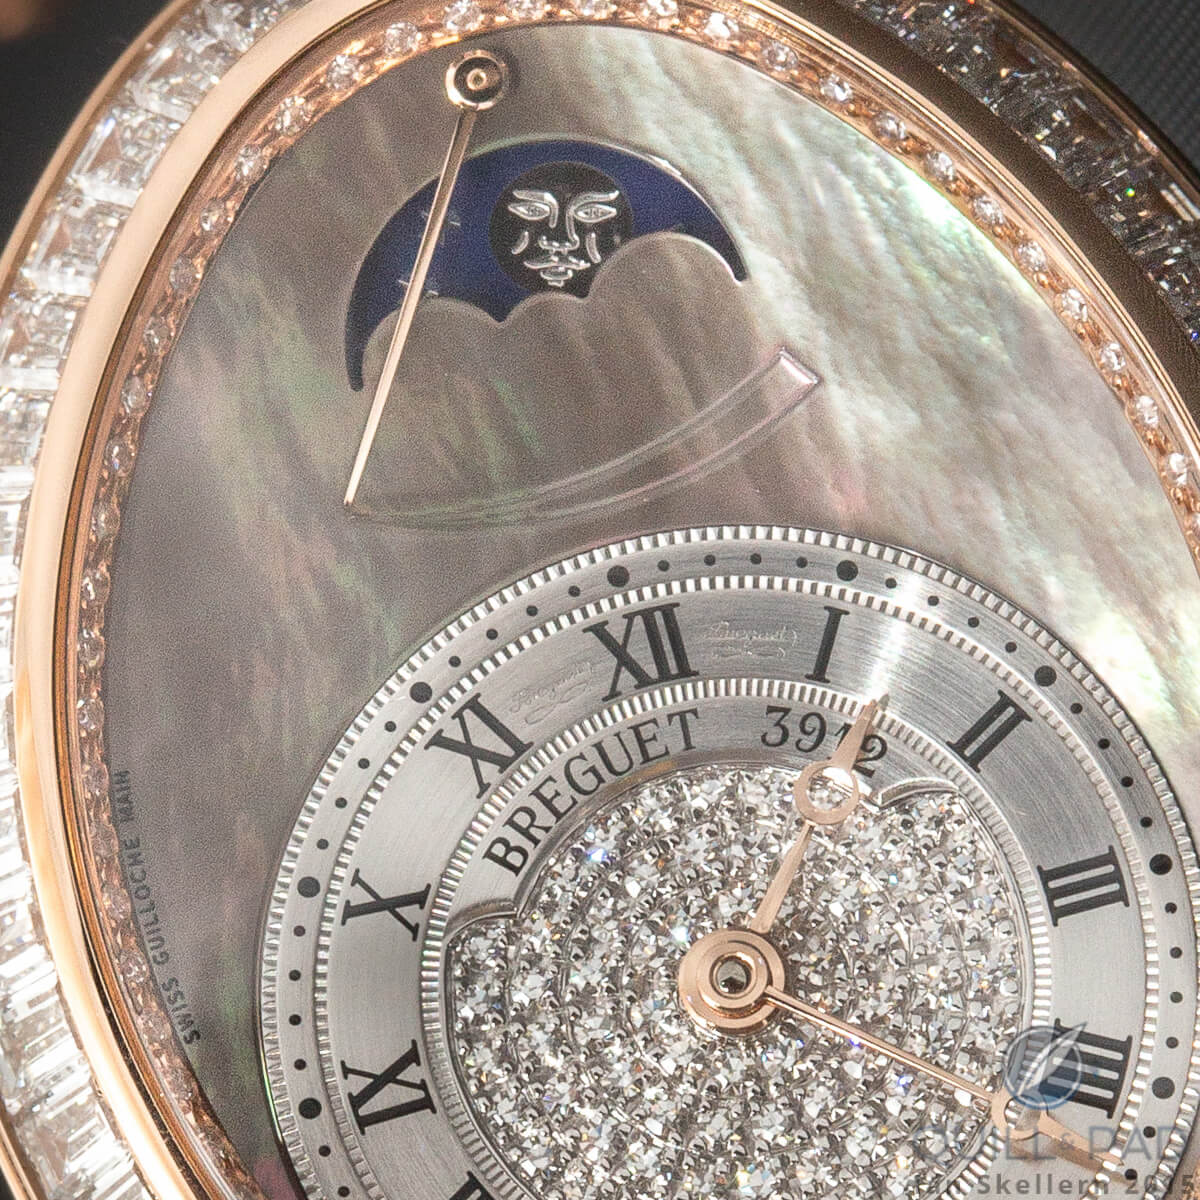 A close look at the dial of the Breguet Reine de Naples Haute Joaillerie